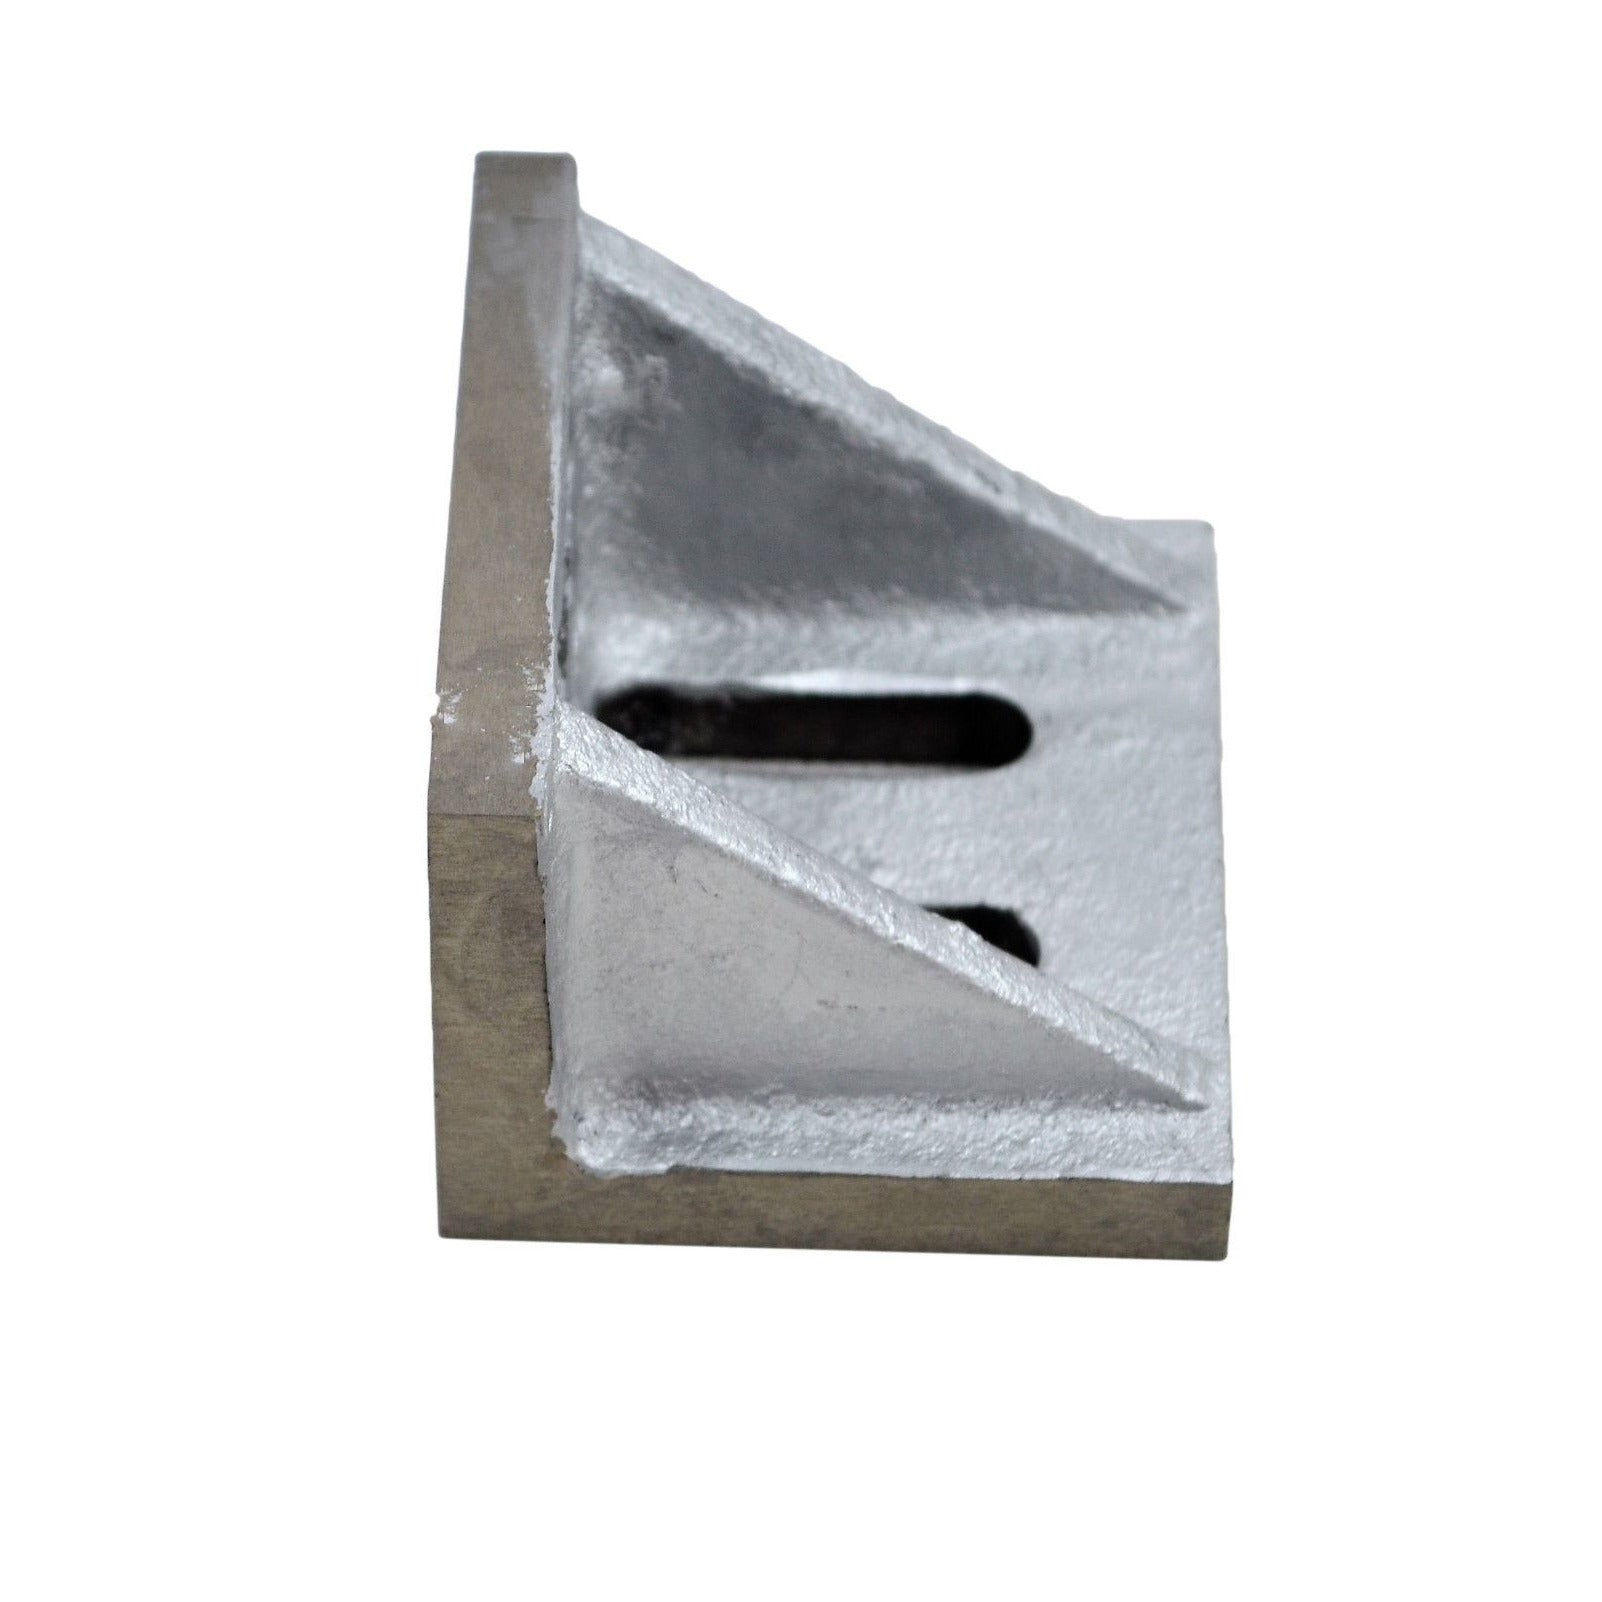       Cast Iron Angle Plate 3" x 2.5" x 2". Precision Tool. Machining/ Milling/ CNC.